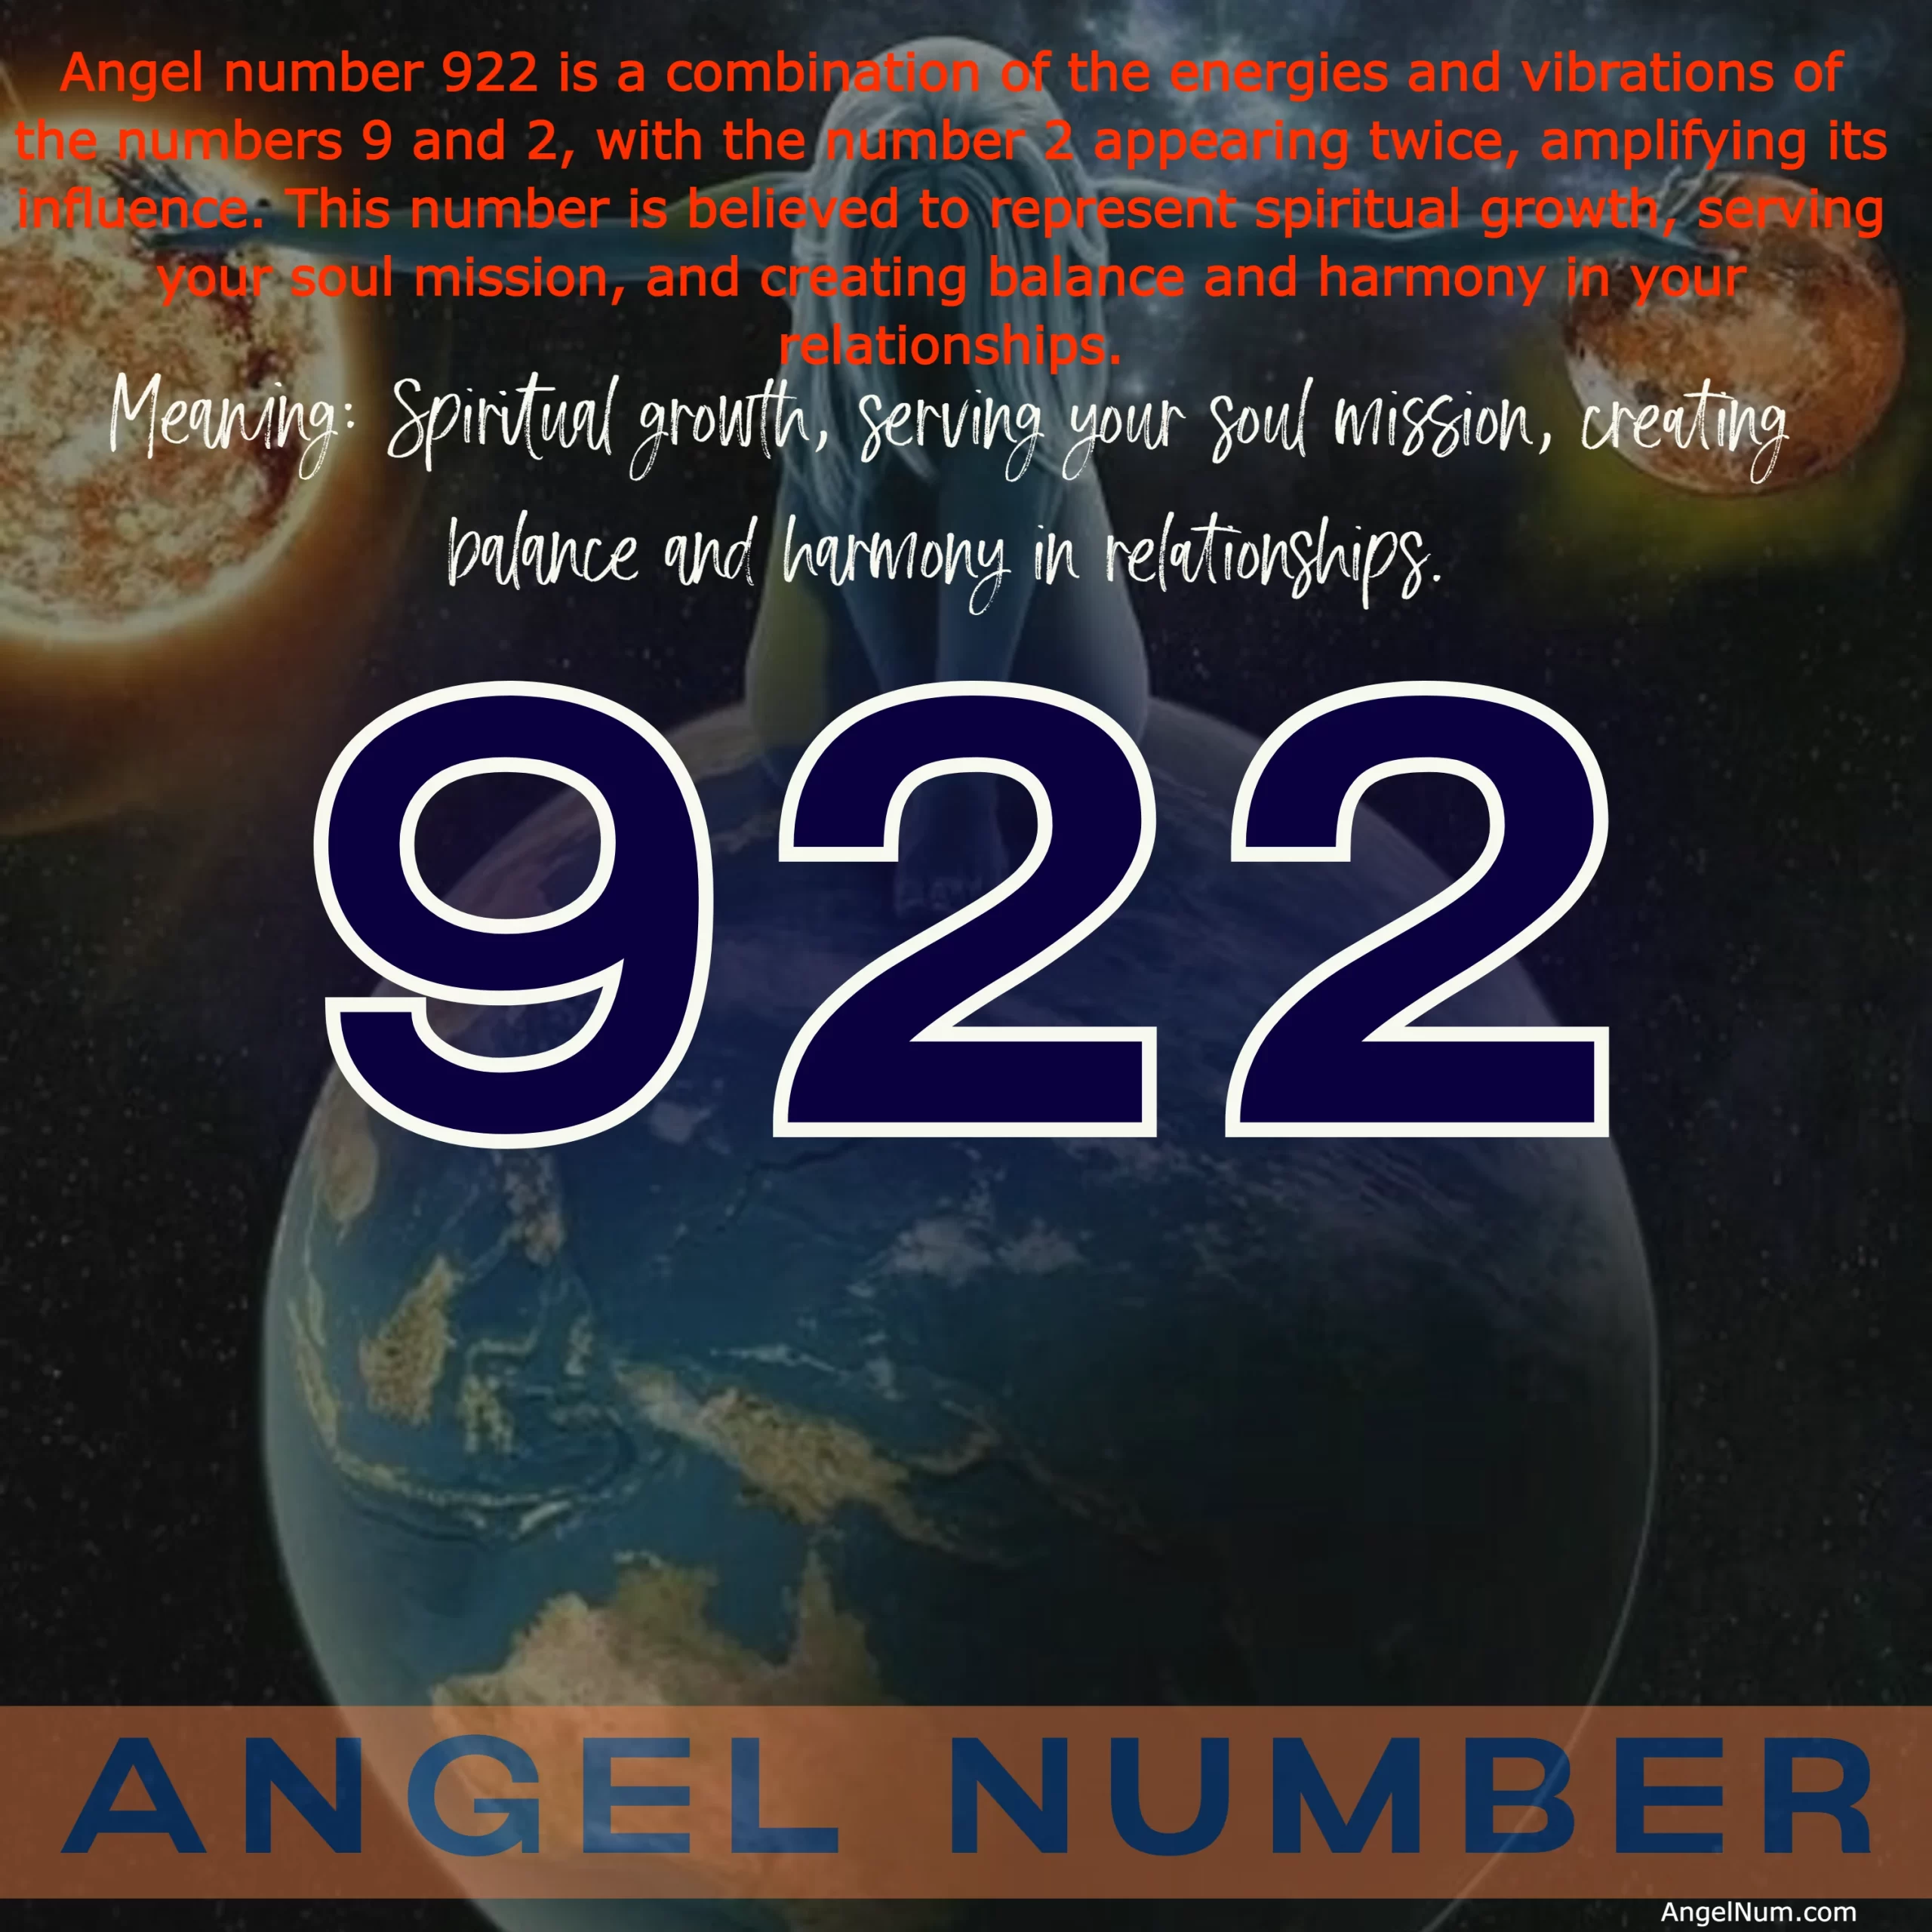 Angel Number 922: Spiritual Growth and Creating Balance